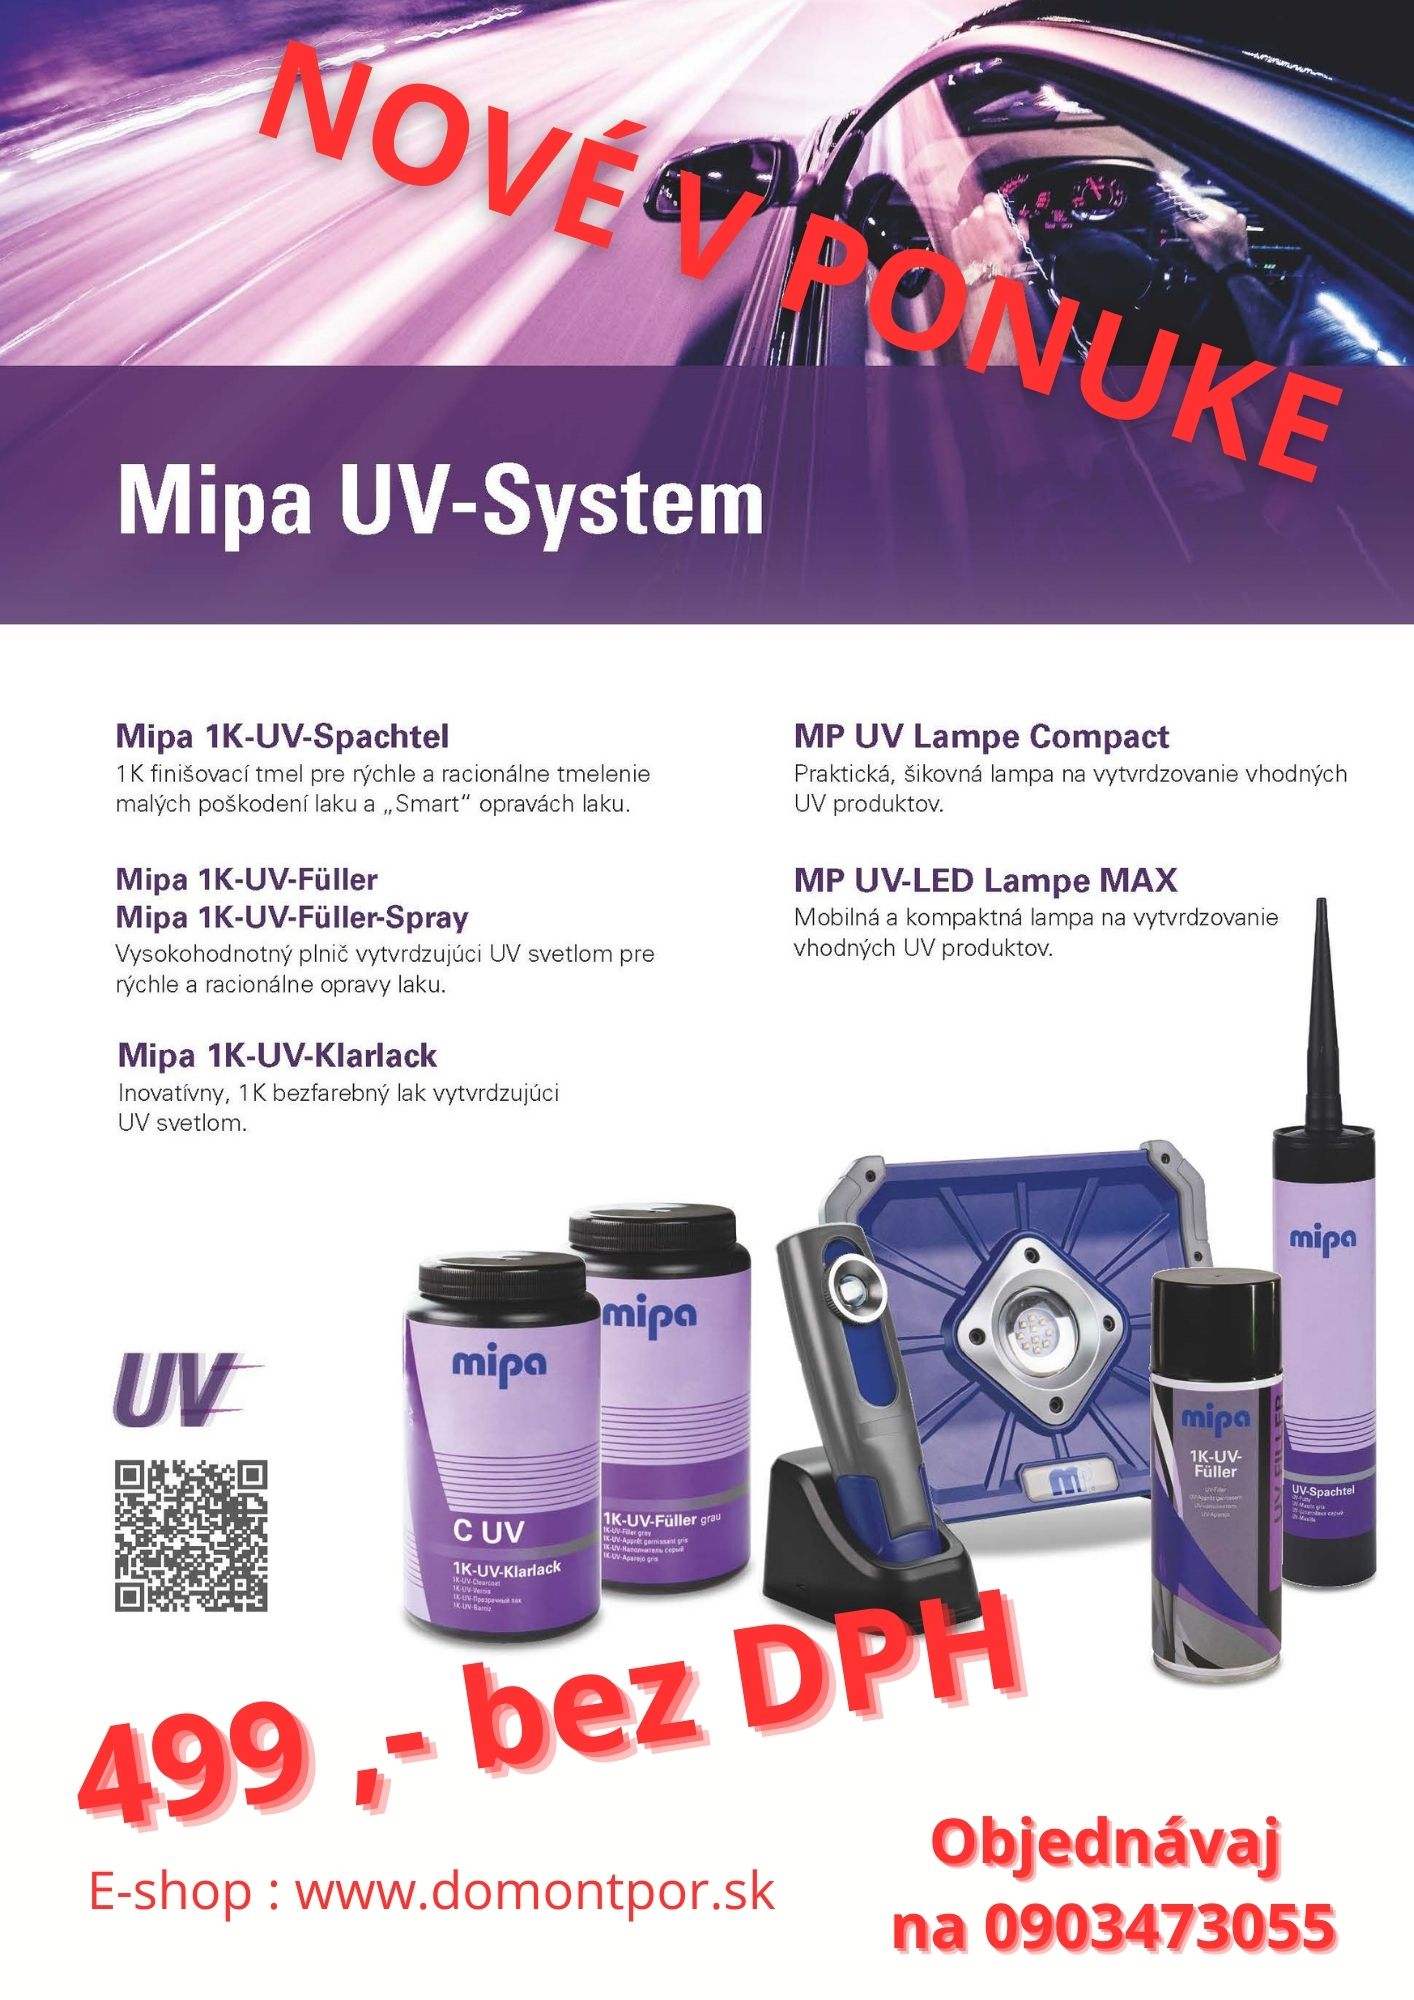 UV system